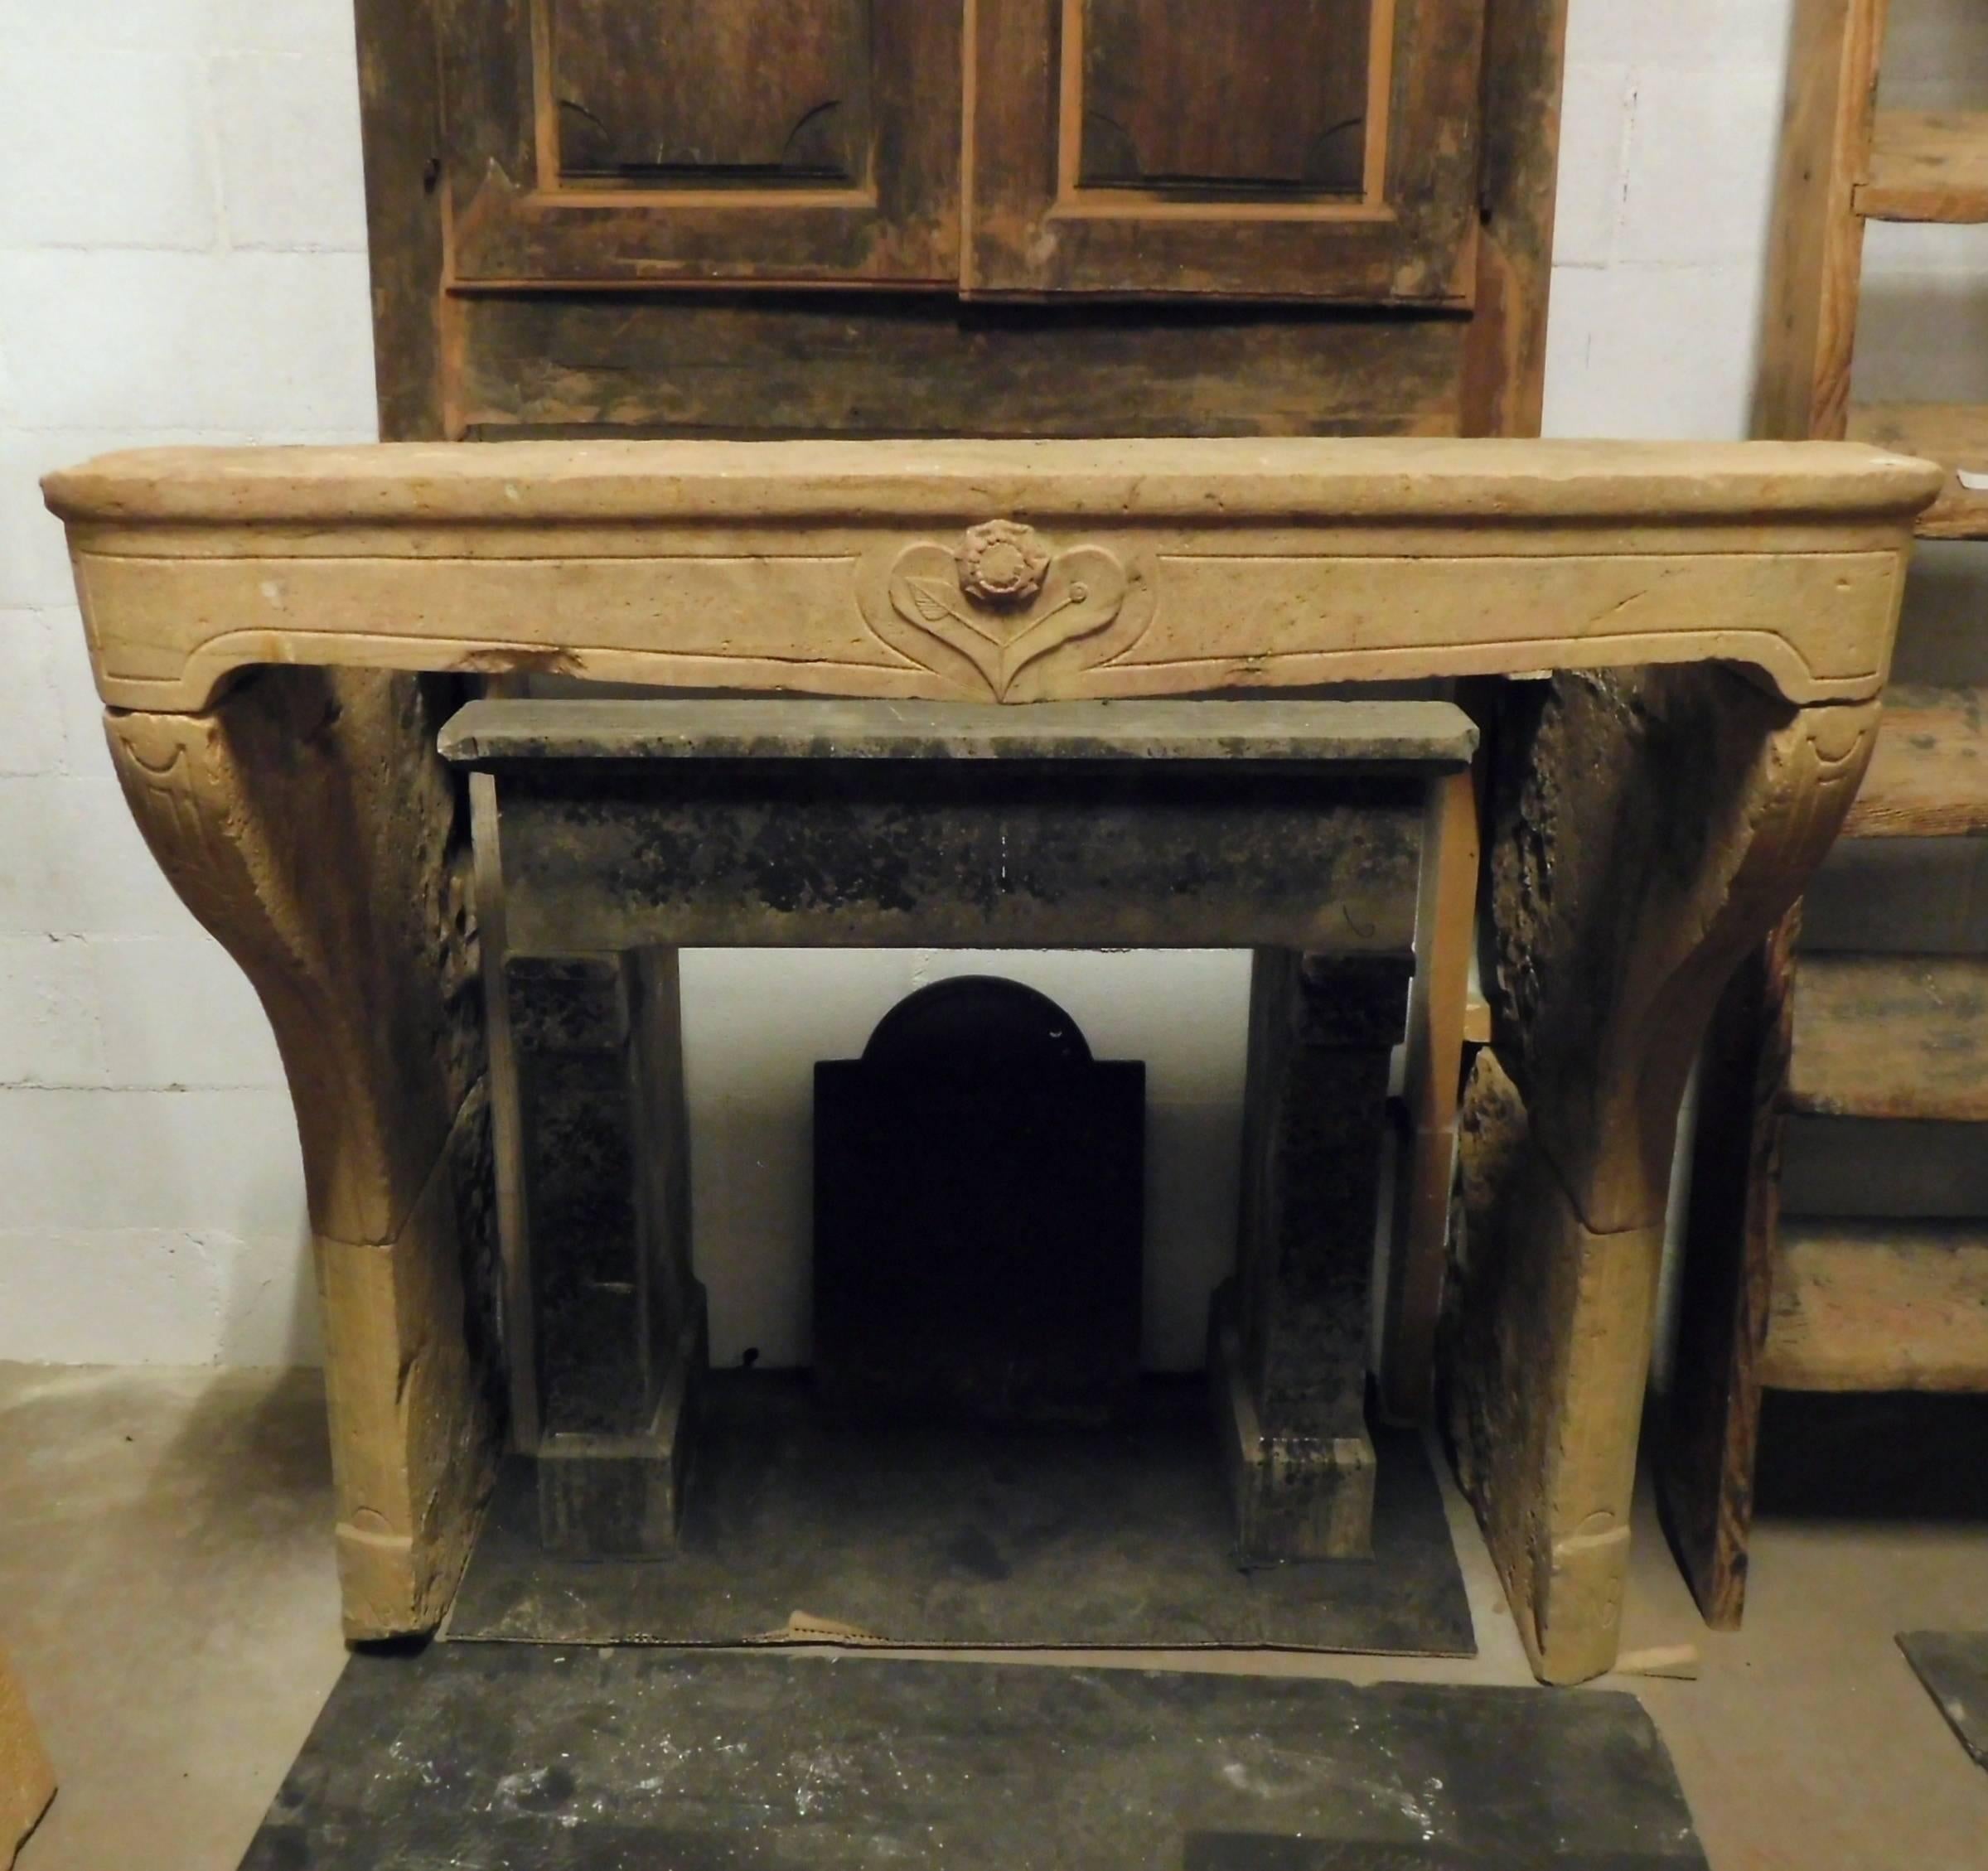 18th century fireplace mantel made of Borgogna's stone.